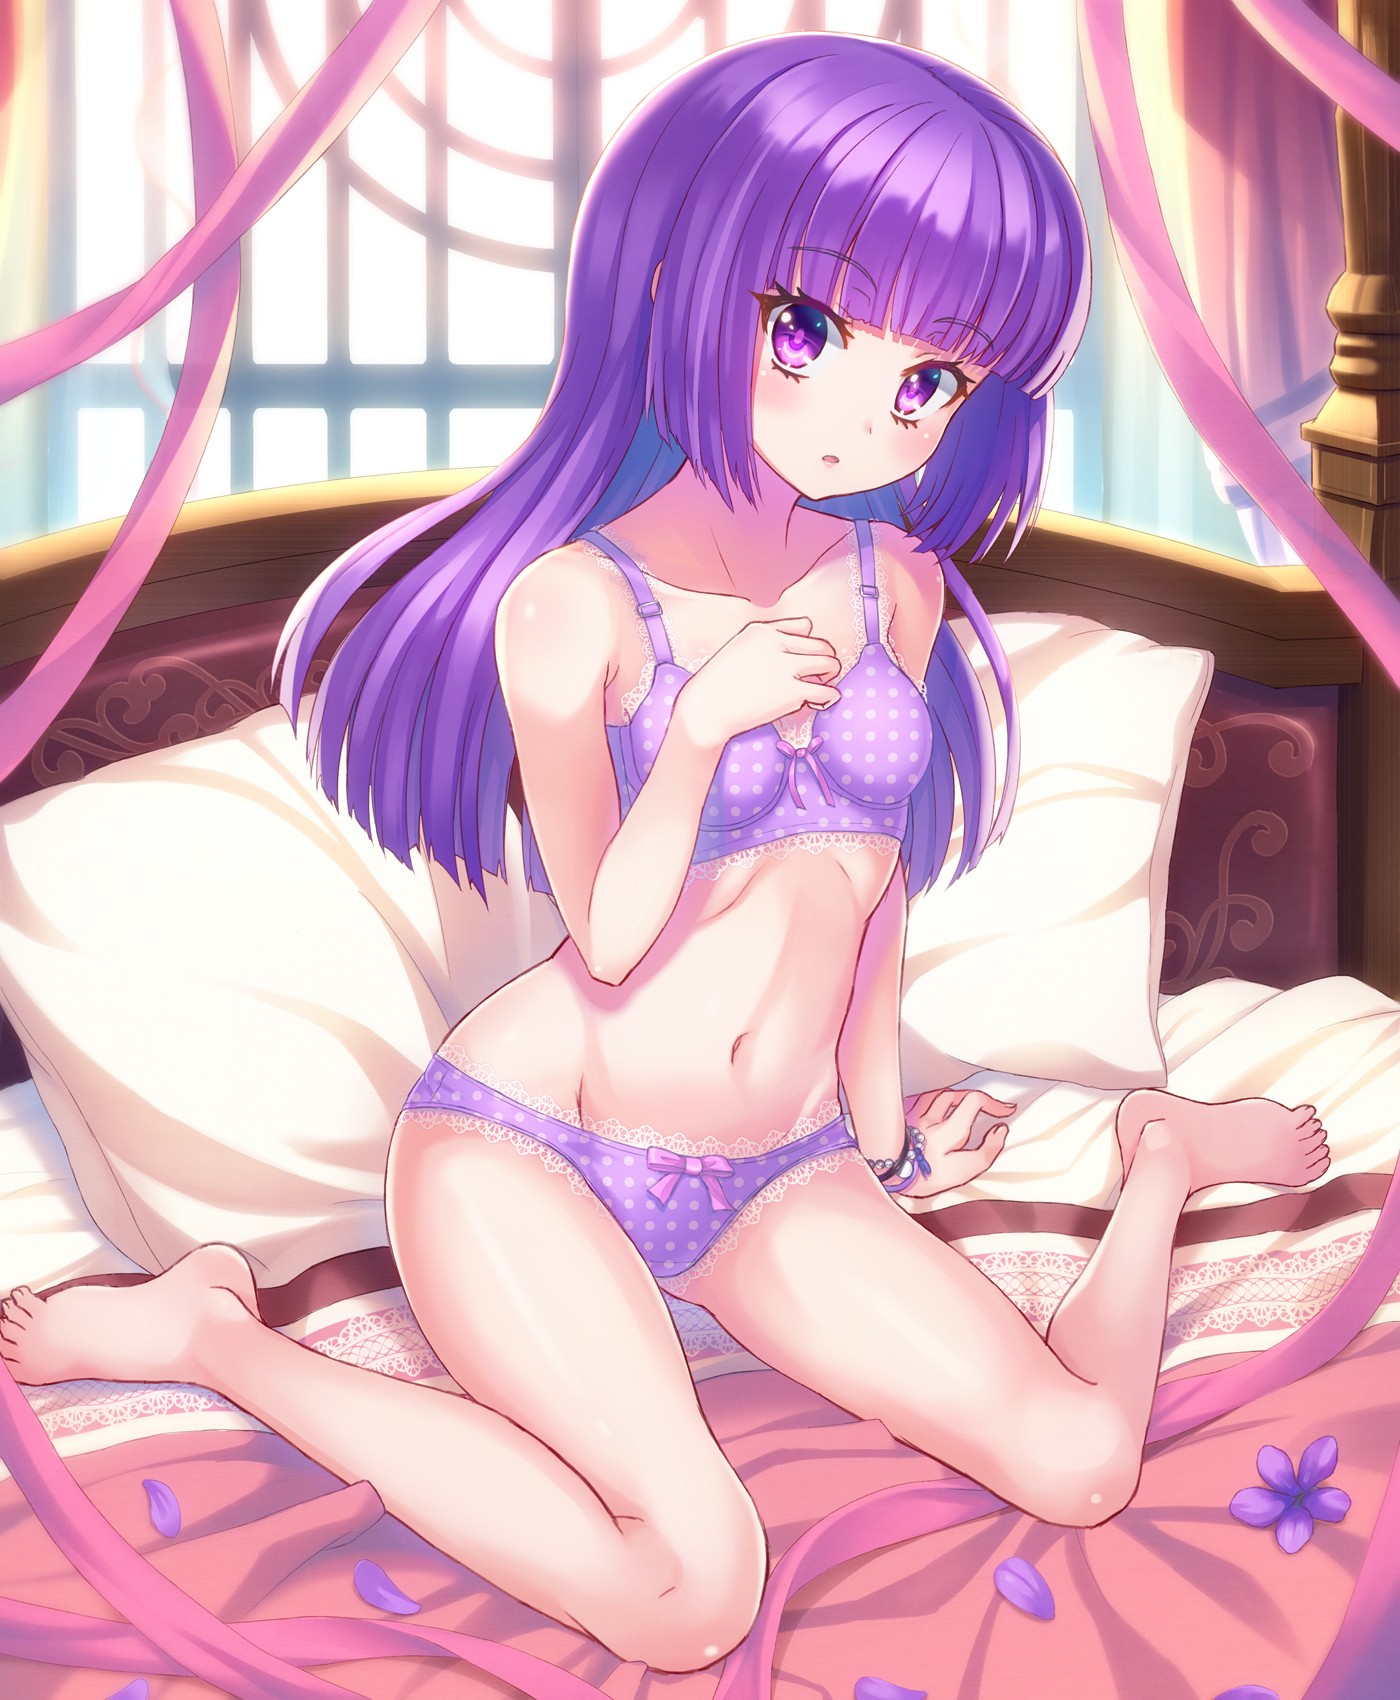 Anime 1400x1700 anime bra undressing anime girls Pixiv panties purple underwear underwear polka dots purple bra purple panties purple hair purple eyes looking at viewer bed in bed bedroom barefoot women